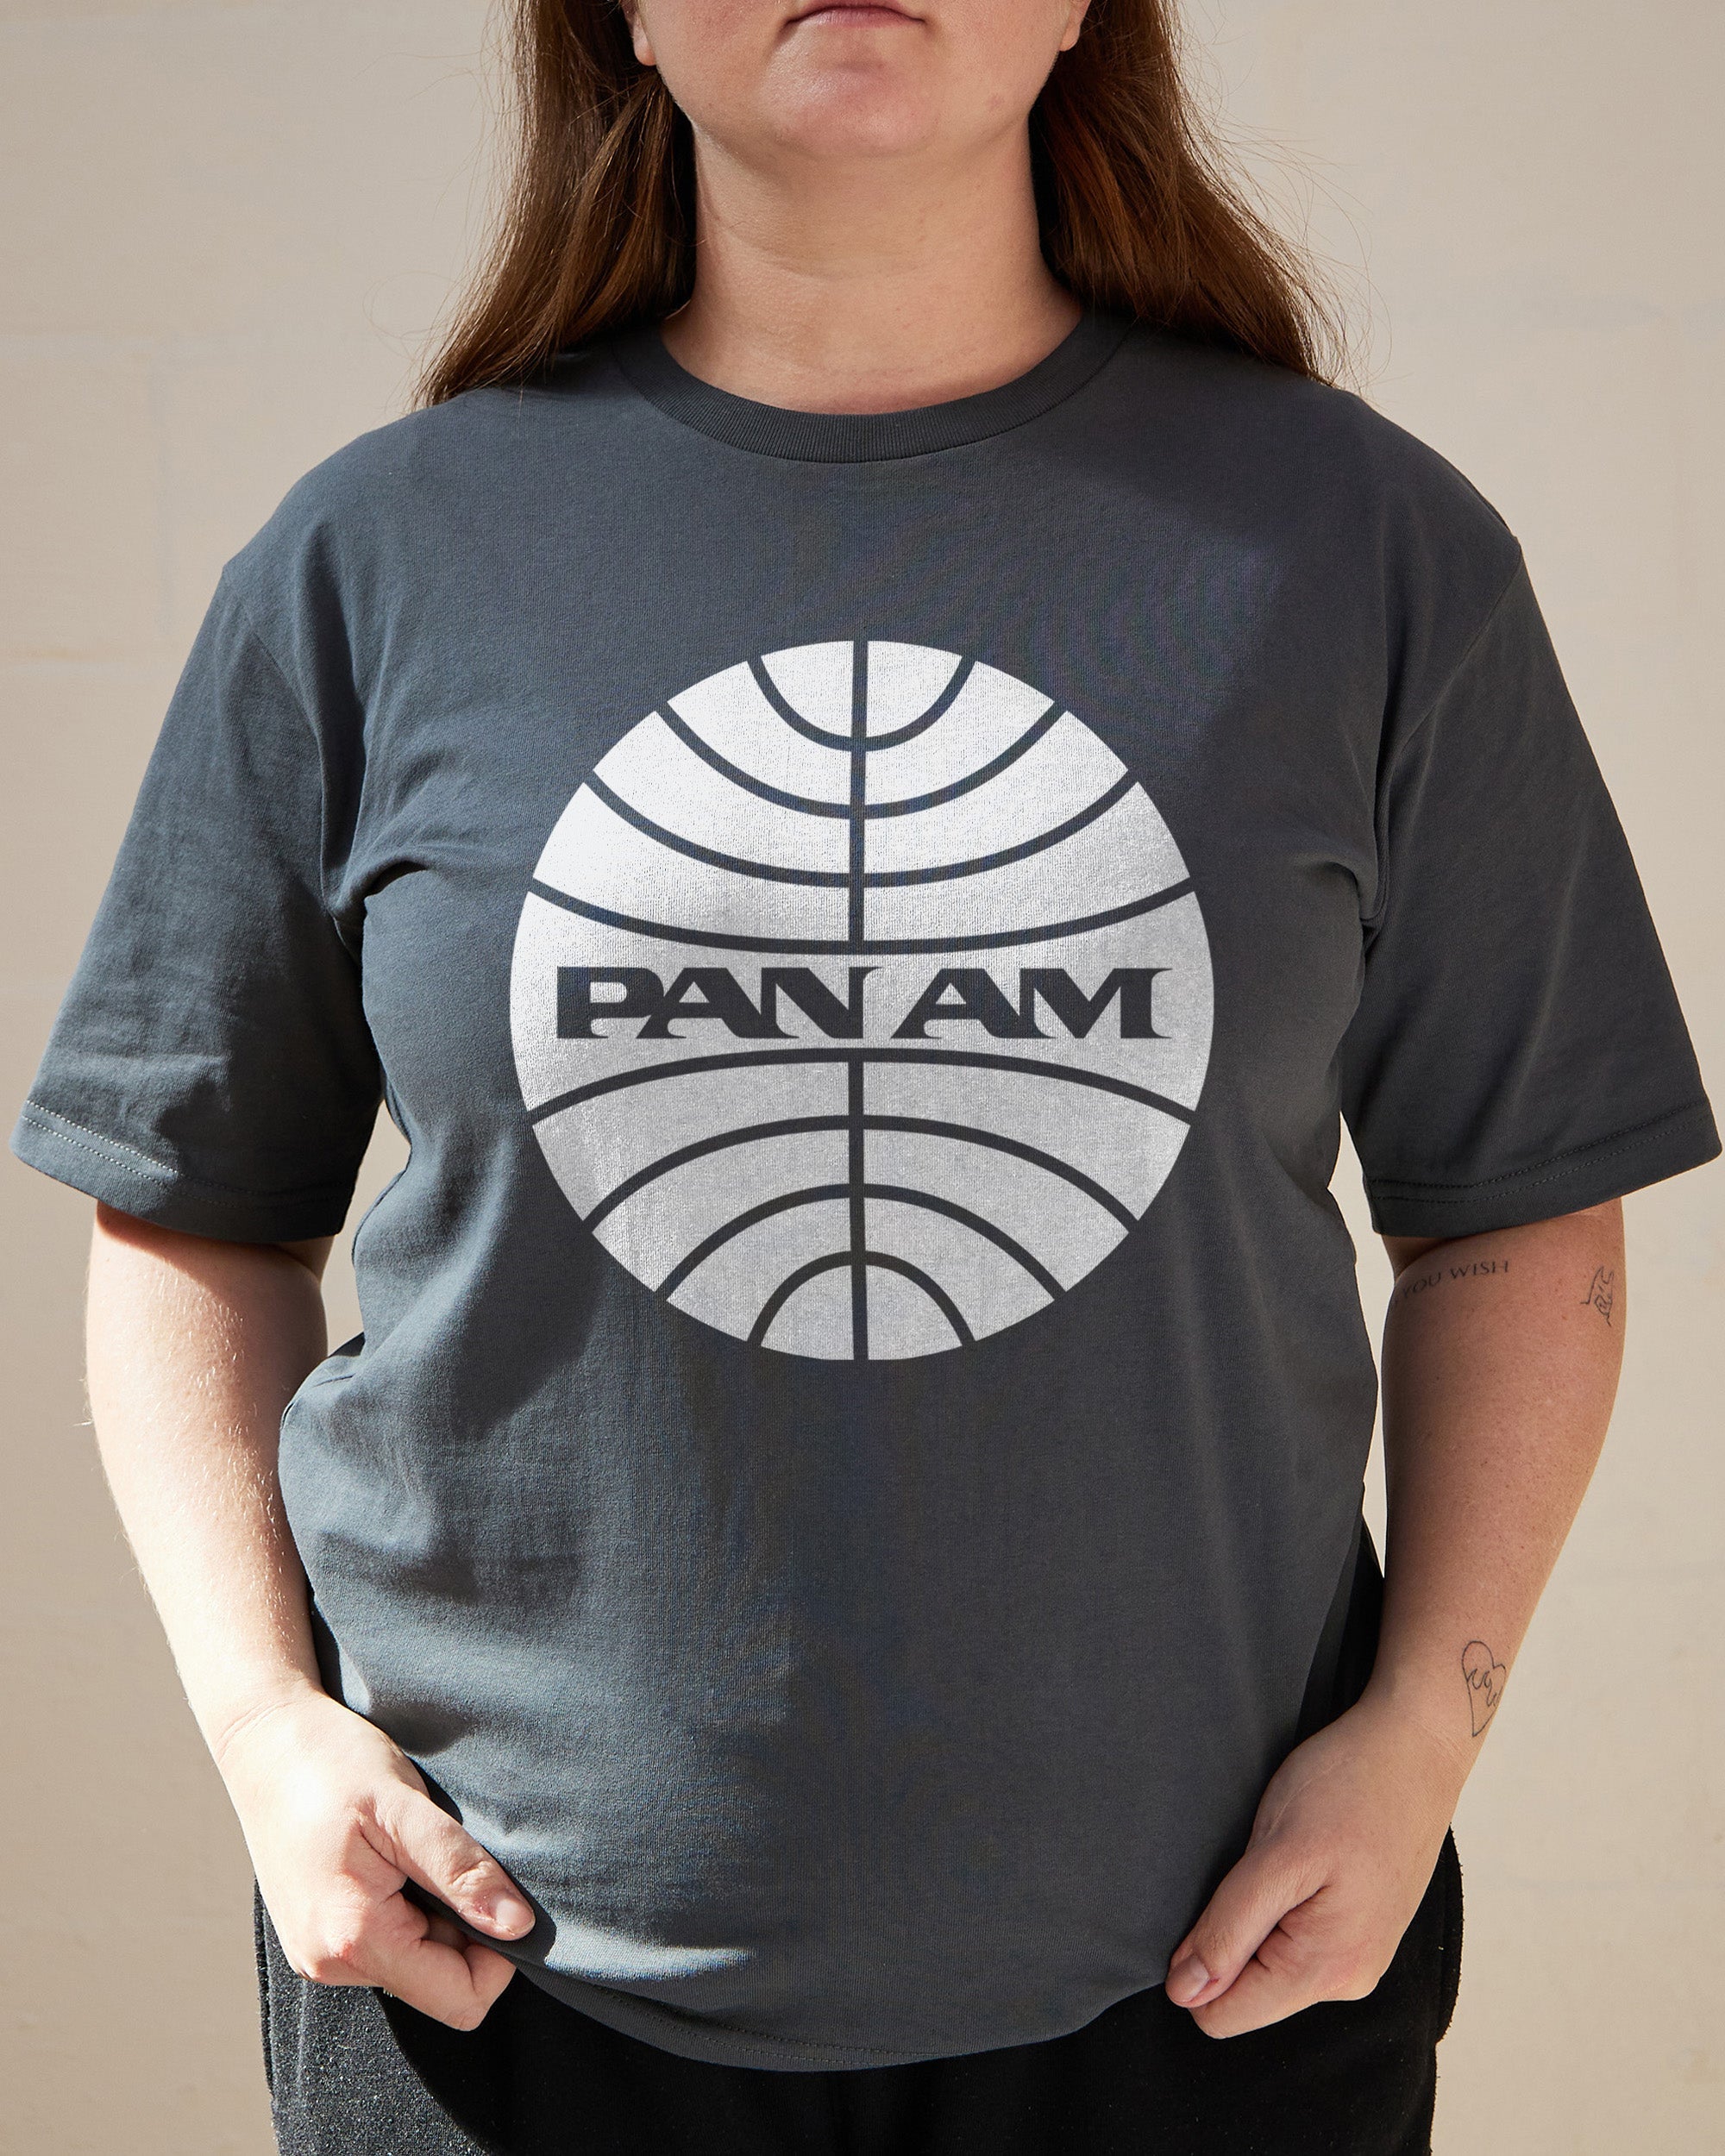 Pan Am T-Shirt Australia Online Charcoal